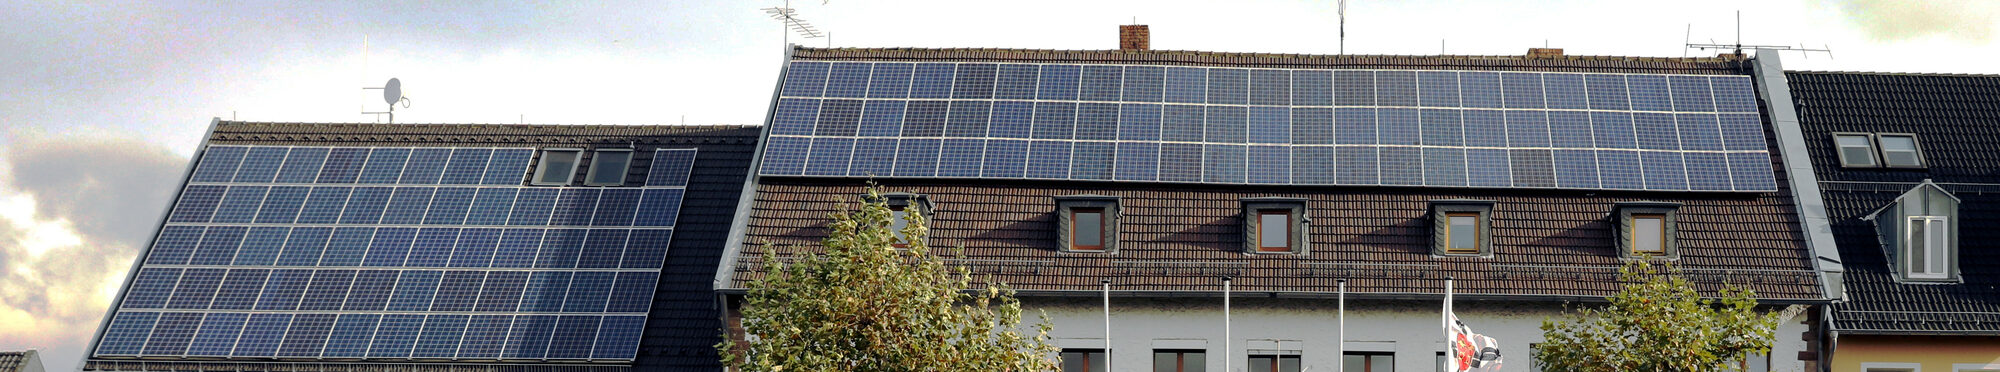 Solarpanels auf dem Dach des Zülpicher Rathauses